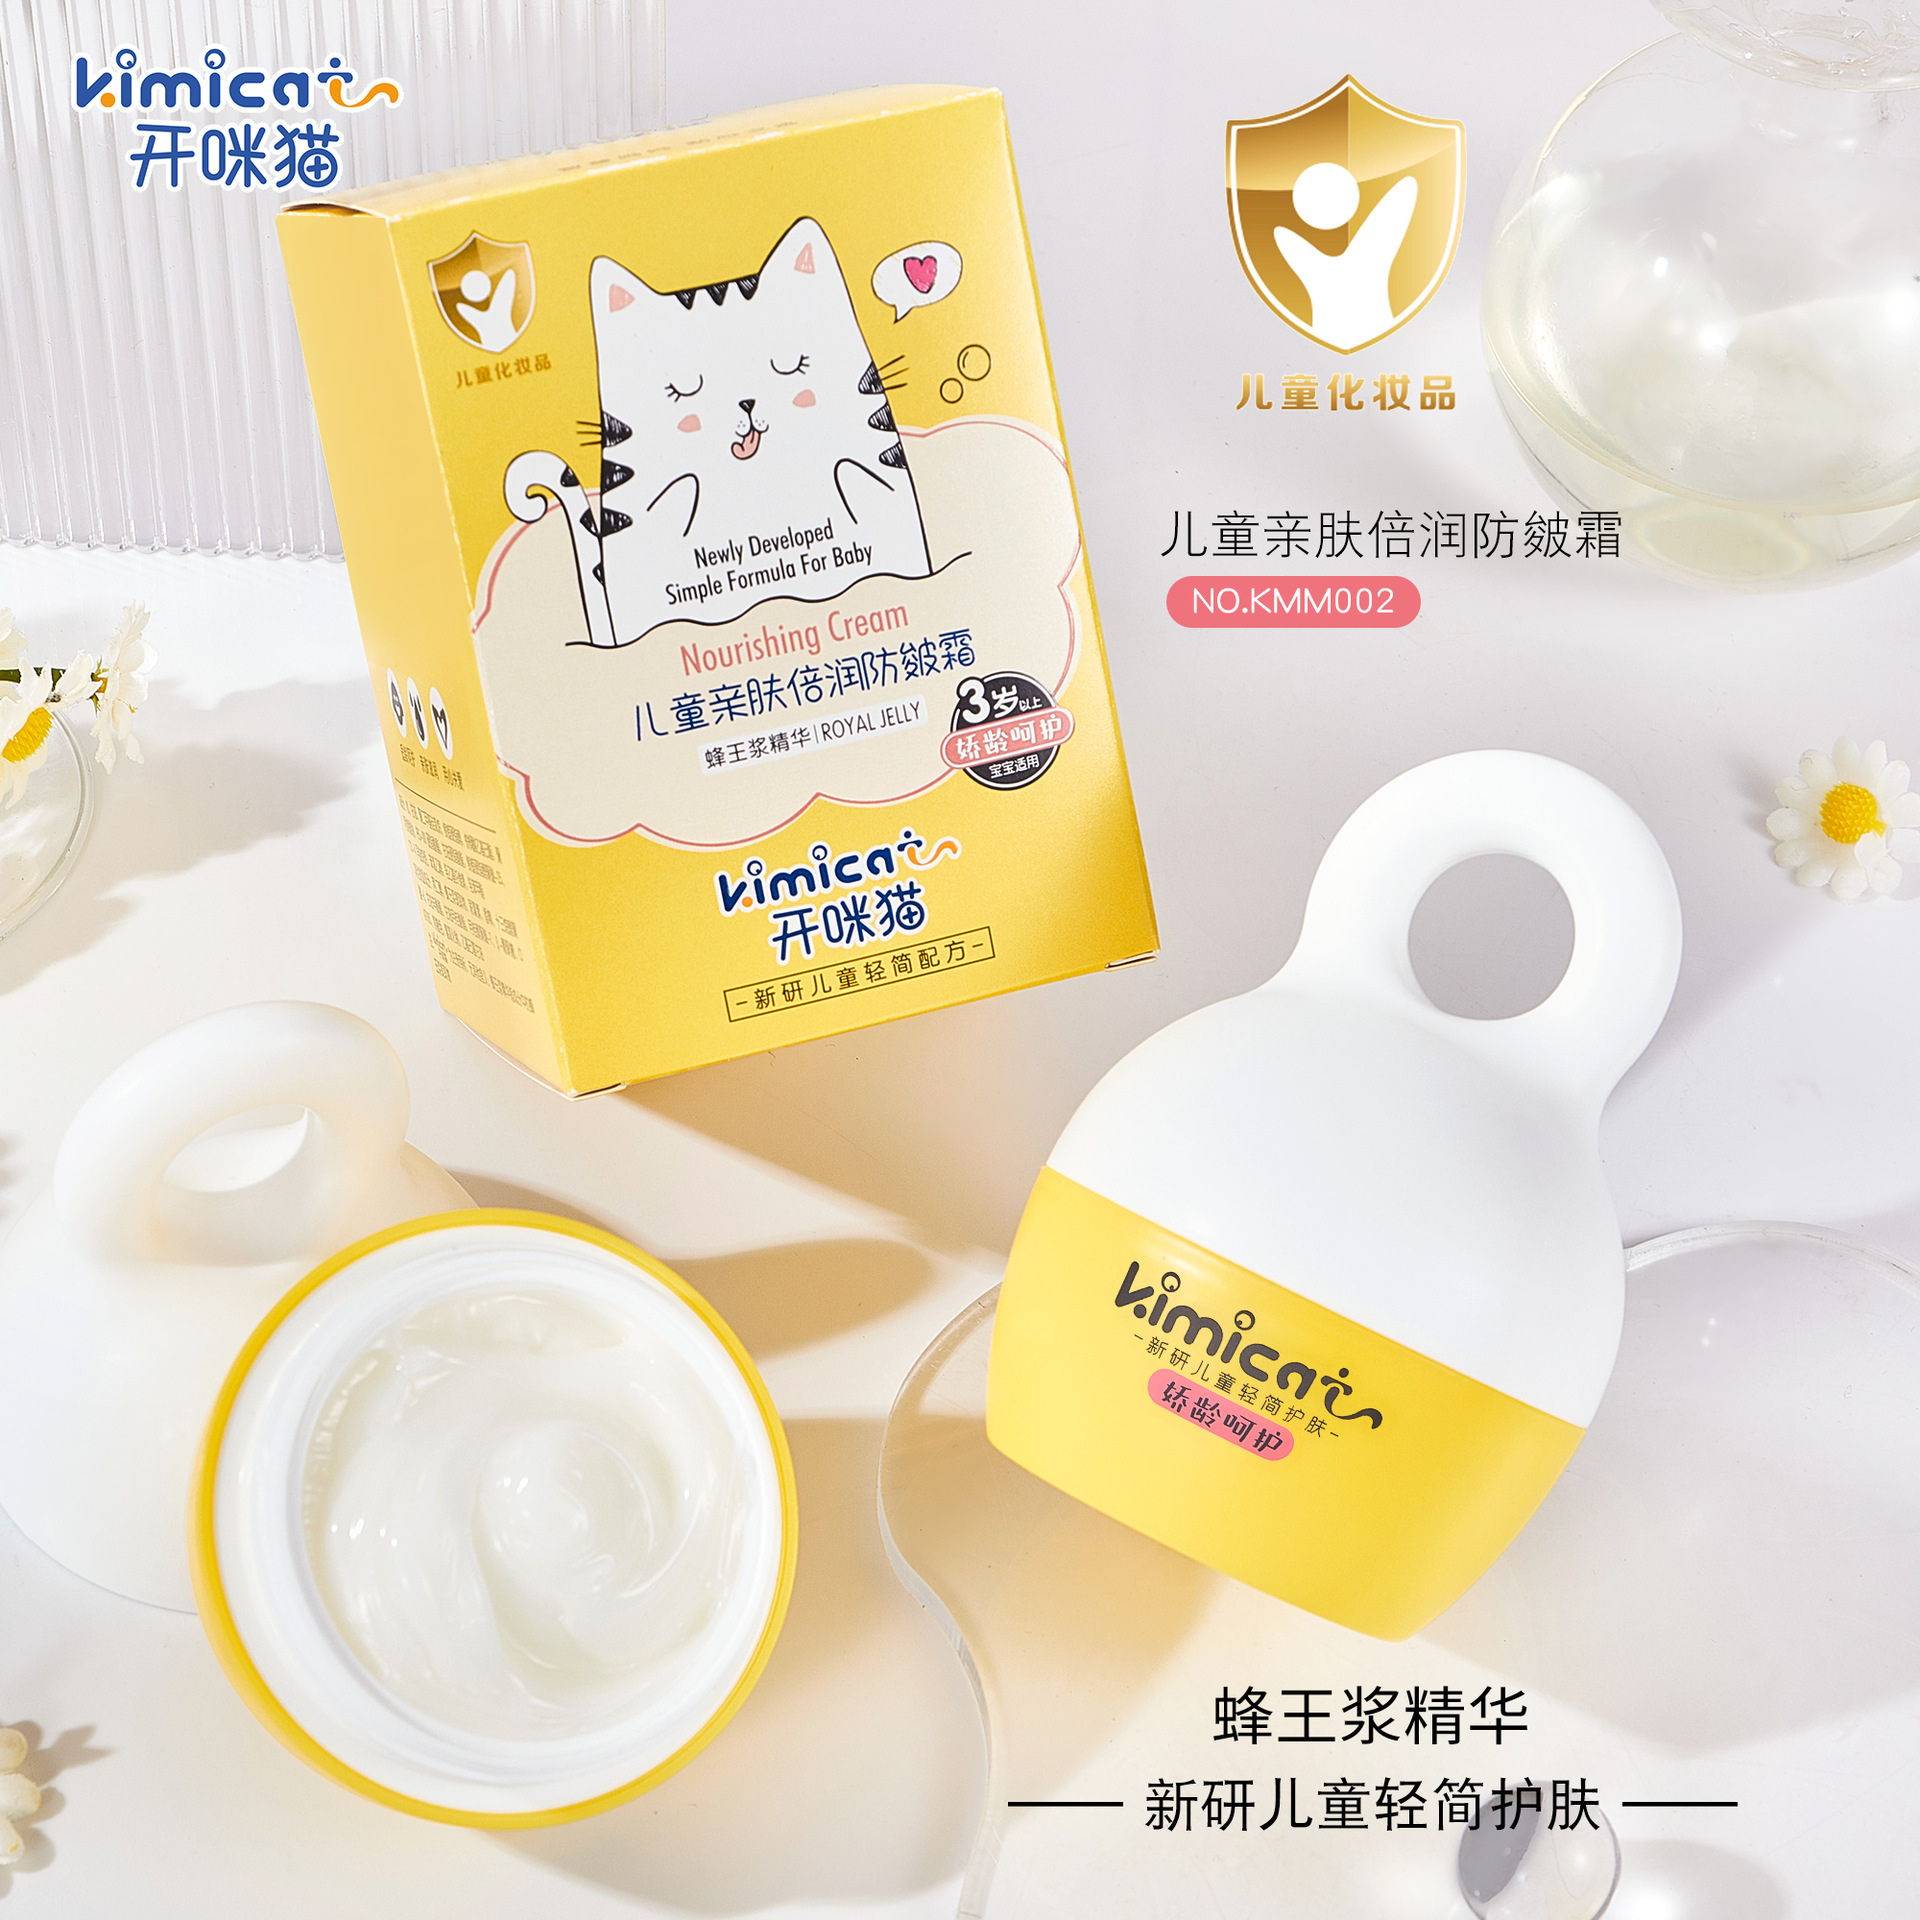 Children's Cream Wholesale Authentic Baby's Facial Cream Nourishing, Hydrating and Moisturizing Baby Face Cream Student Run Skin Cream